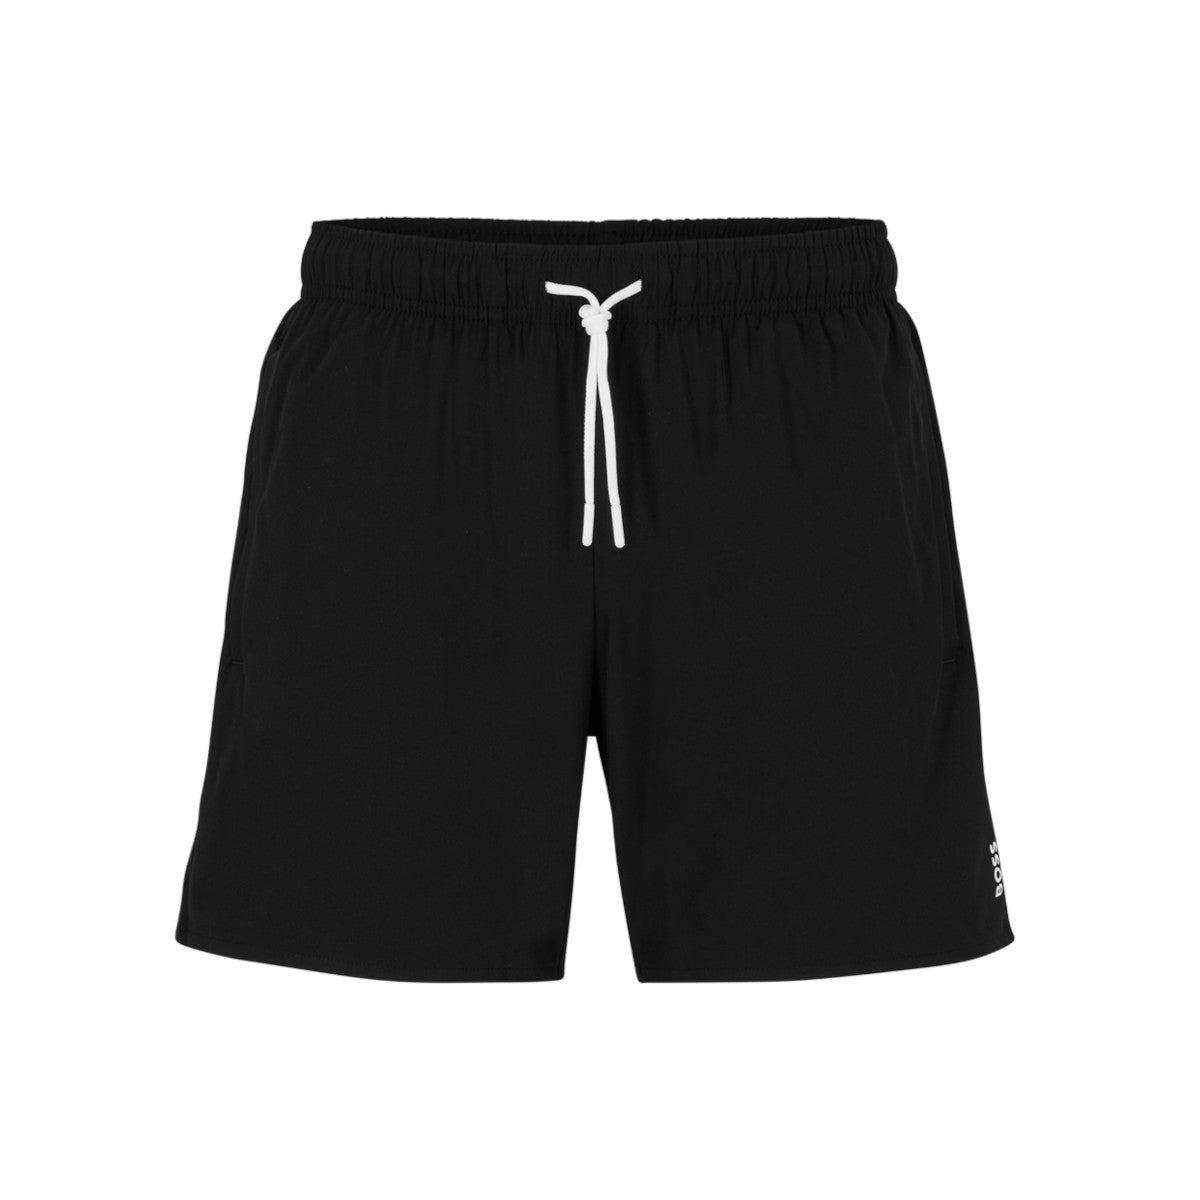 BOSS Black Iconic Swim Shorts 10239741 001 Black